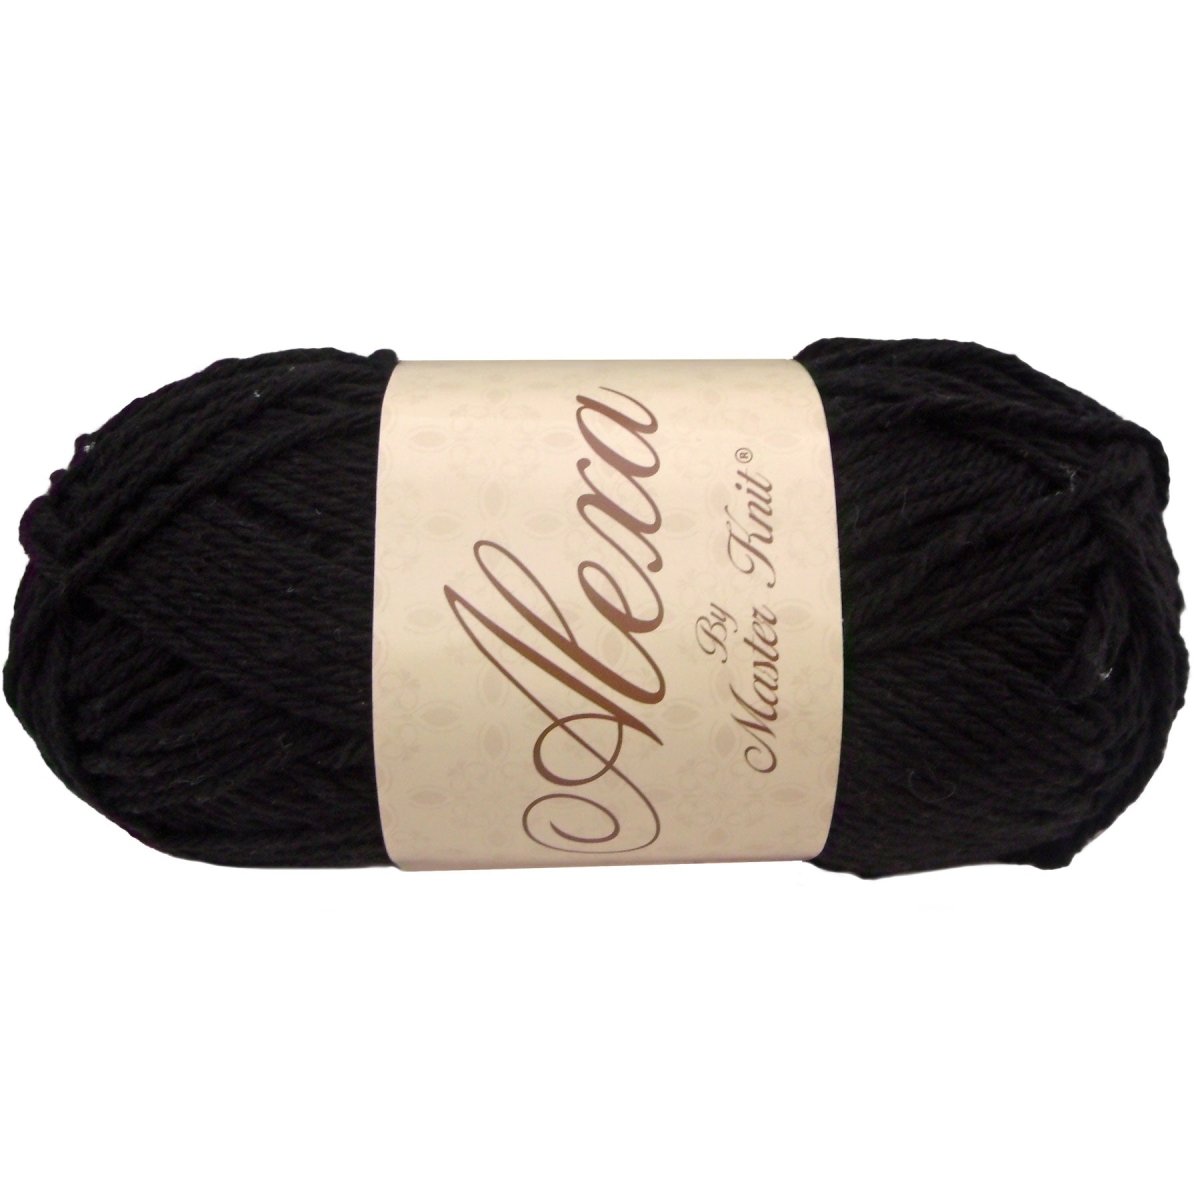 ALEXA - Crochetstores9340-940